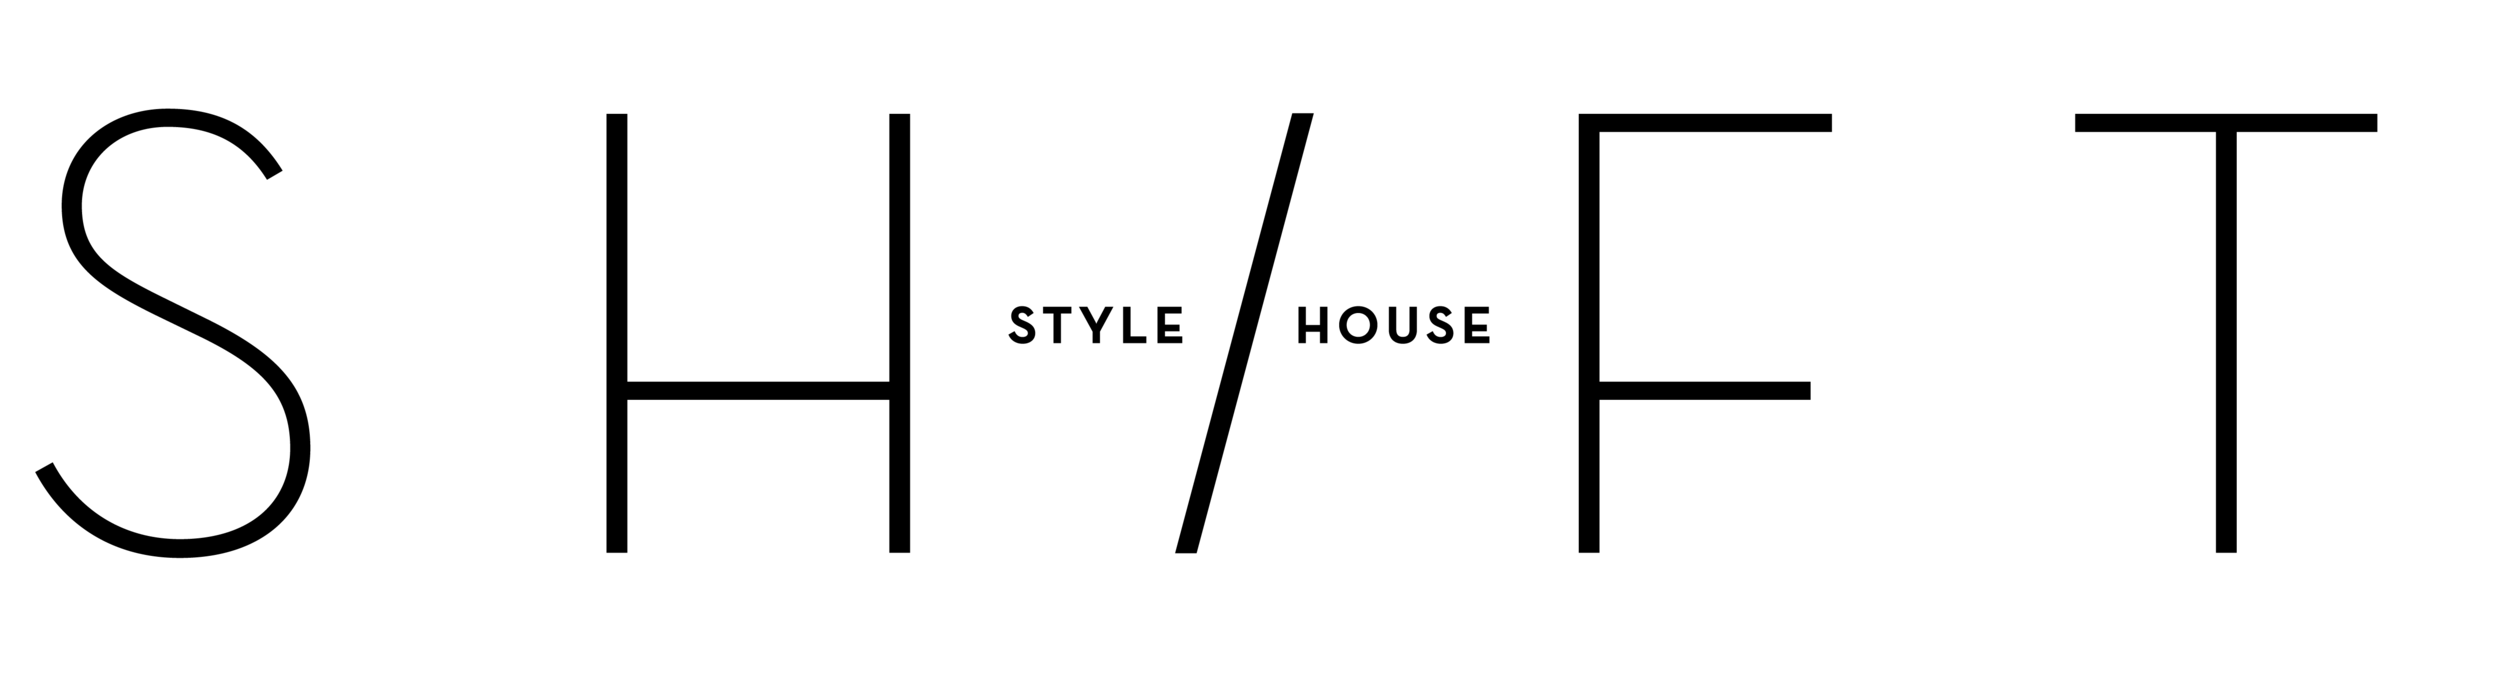 Primary Black Logo.png